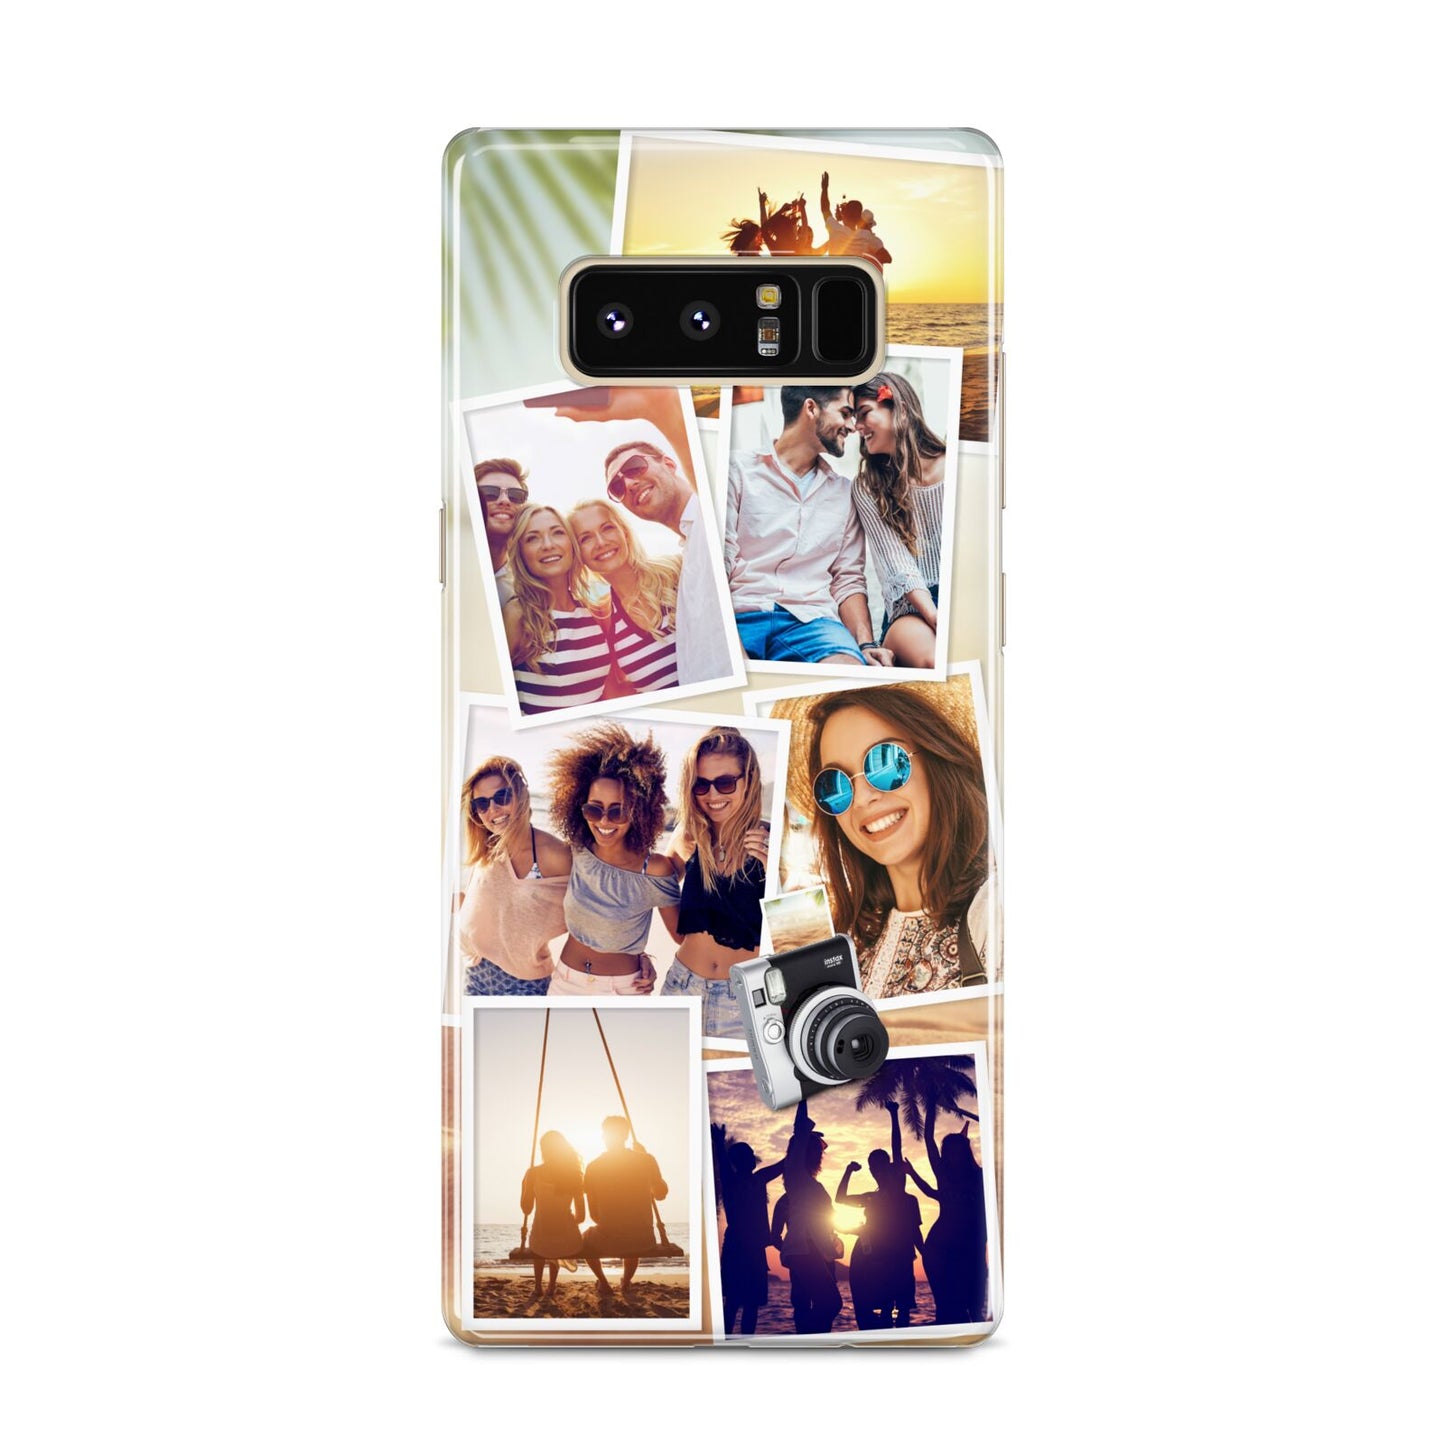 Personalised Summer Holiday Photos Samsung Galaxy S8 Case